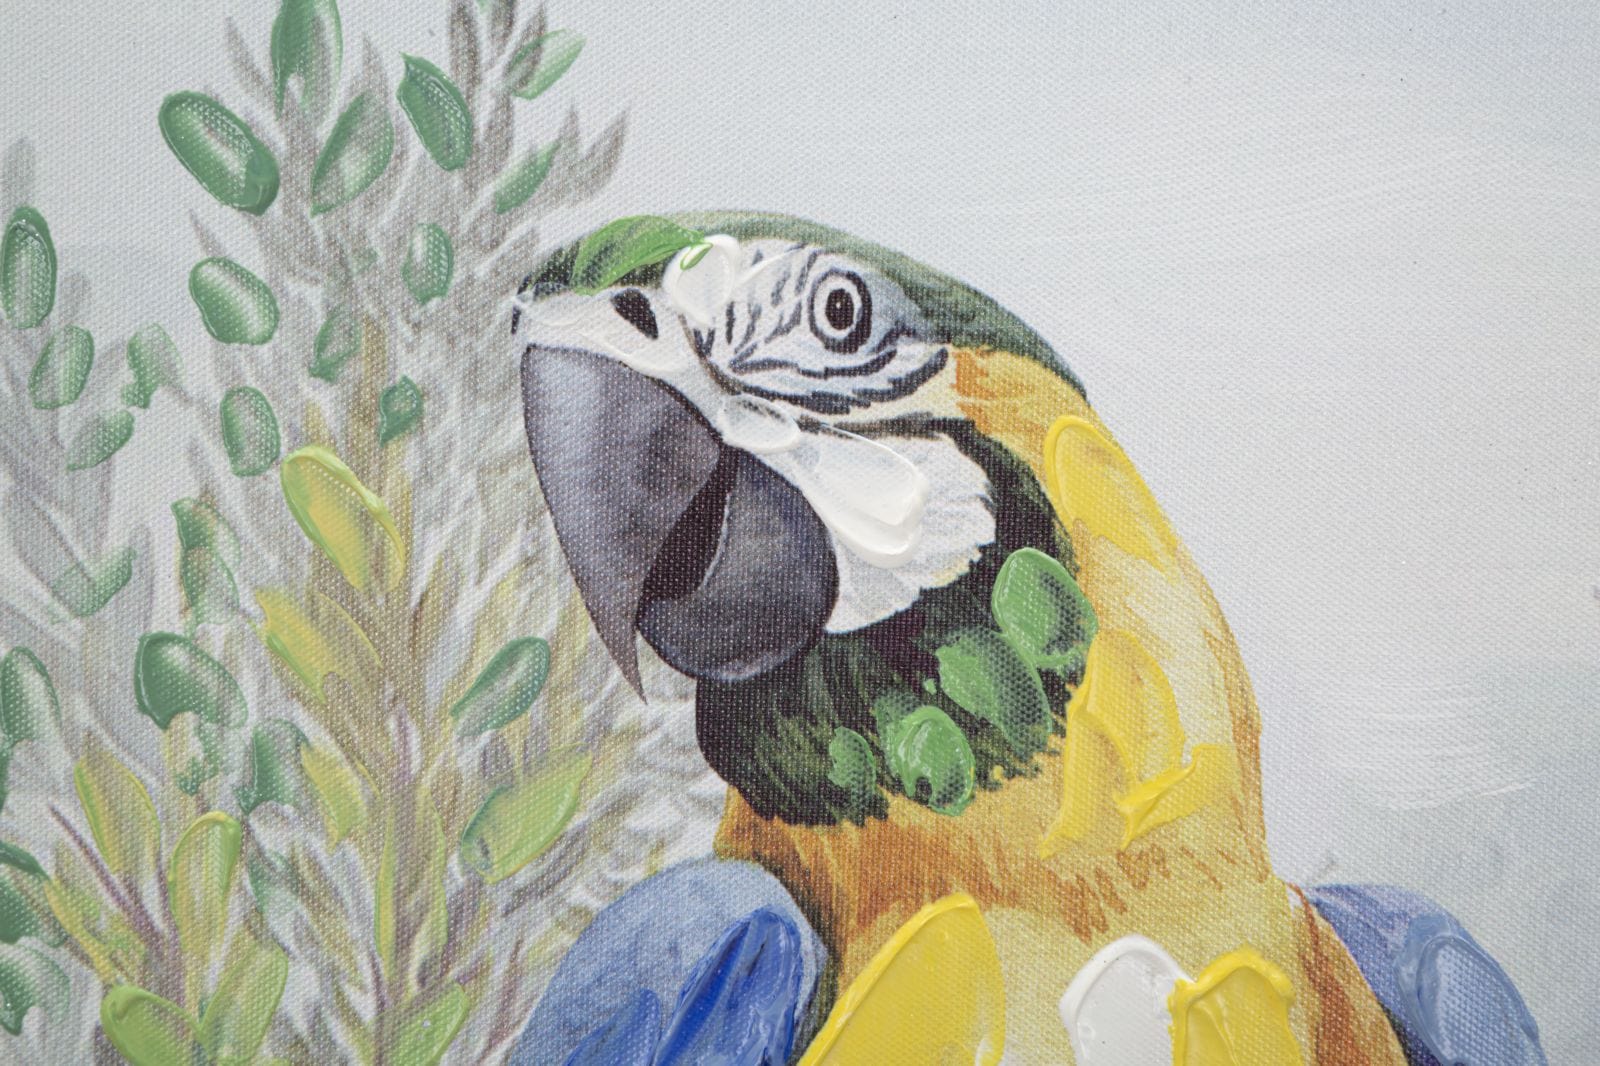 Tablou Canvas Kenda Orizzontal Multicolor, 120 x 90 cm (3)